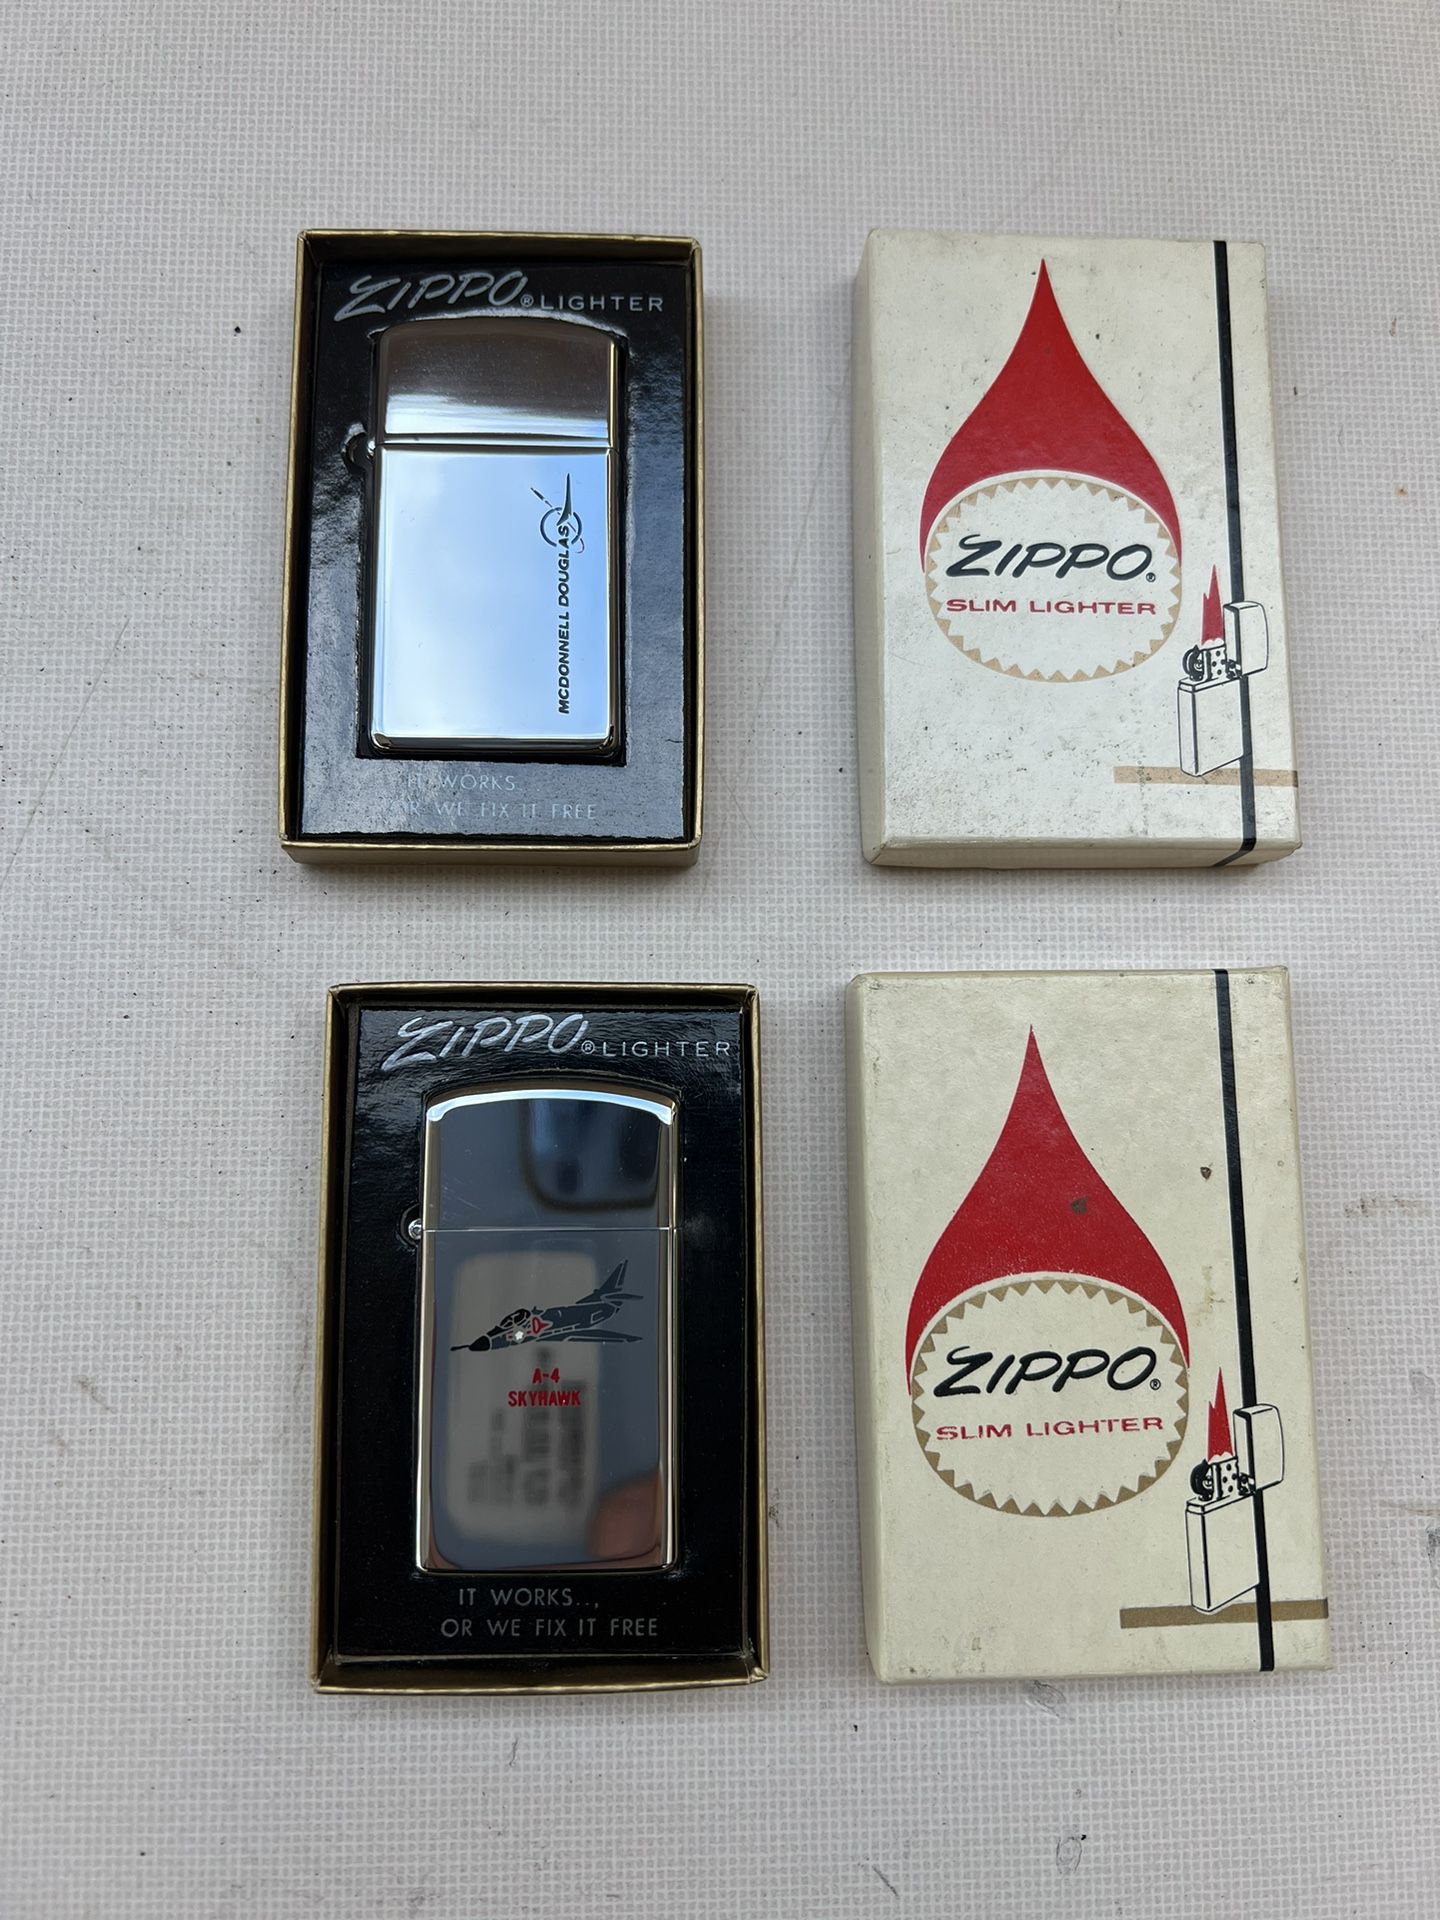 2 Zippo Lighters